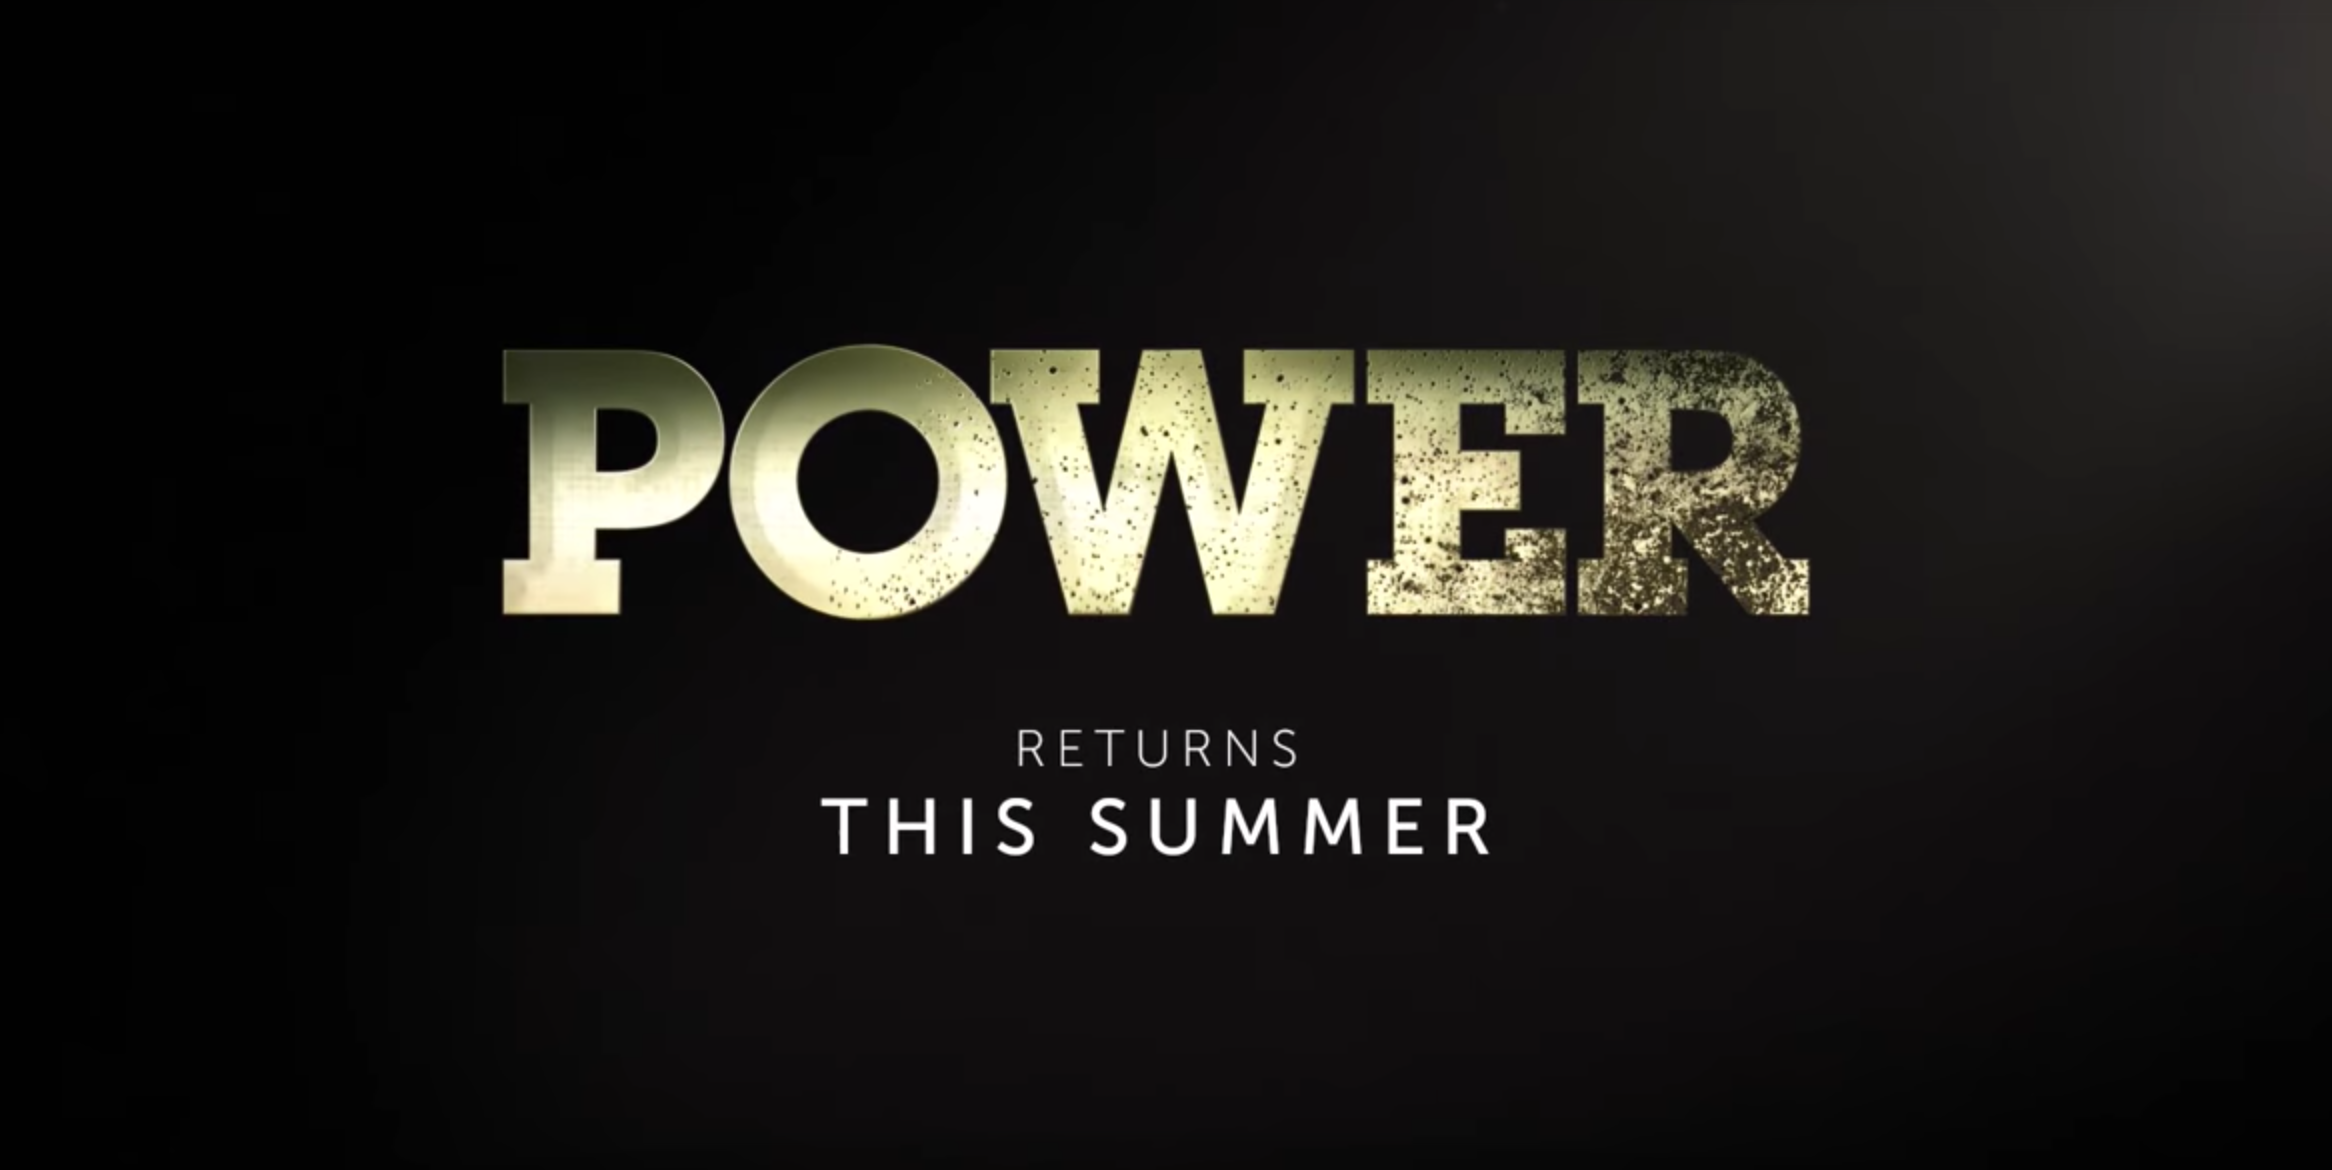 Power. 4power картинка. Бревил Старз обои. Starz logo 2014. Power released